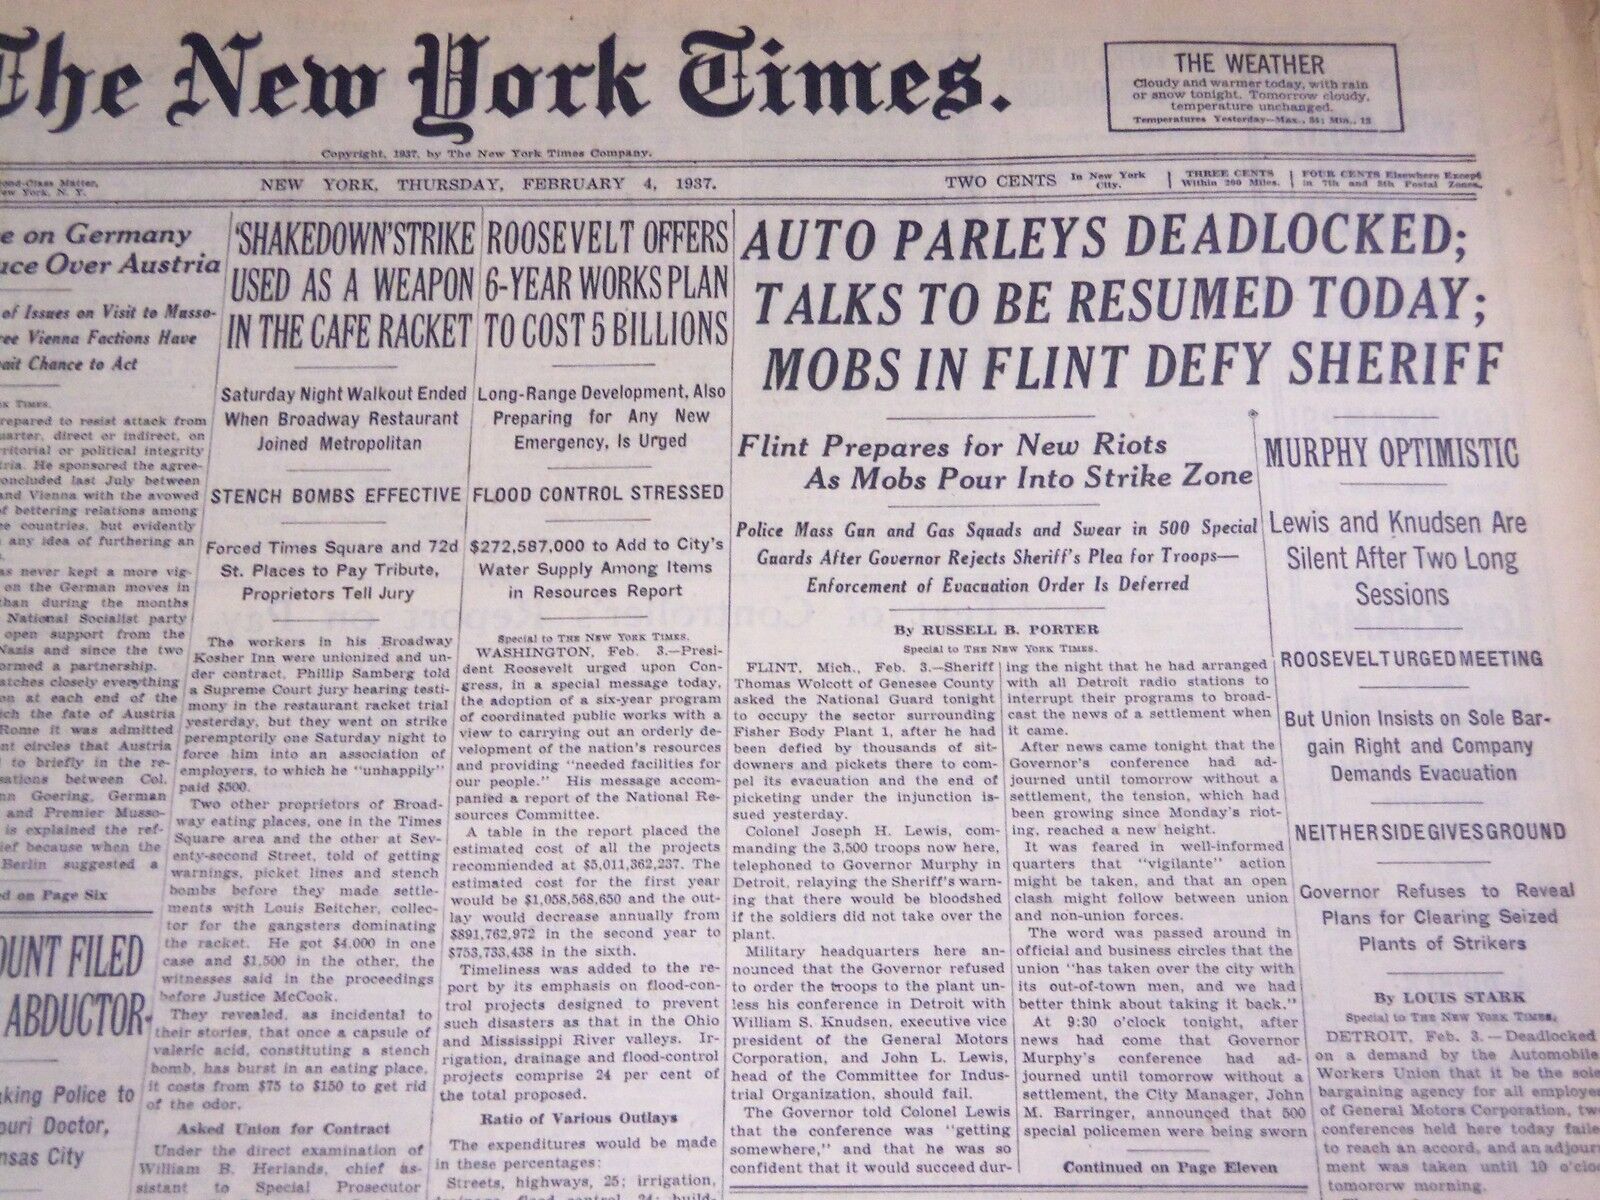 1937 FEB 4 NEW YORK TIMES - AUTO PARLEYS DEADLOCKED MOBS DEFY SHERIFF - NT 1289